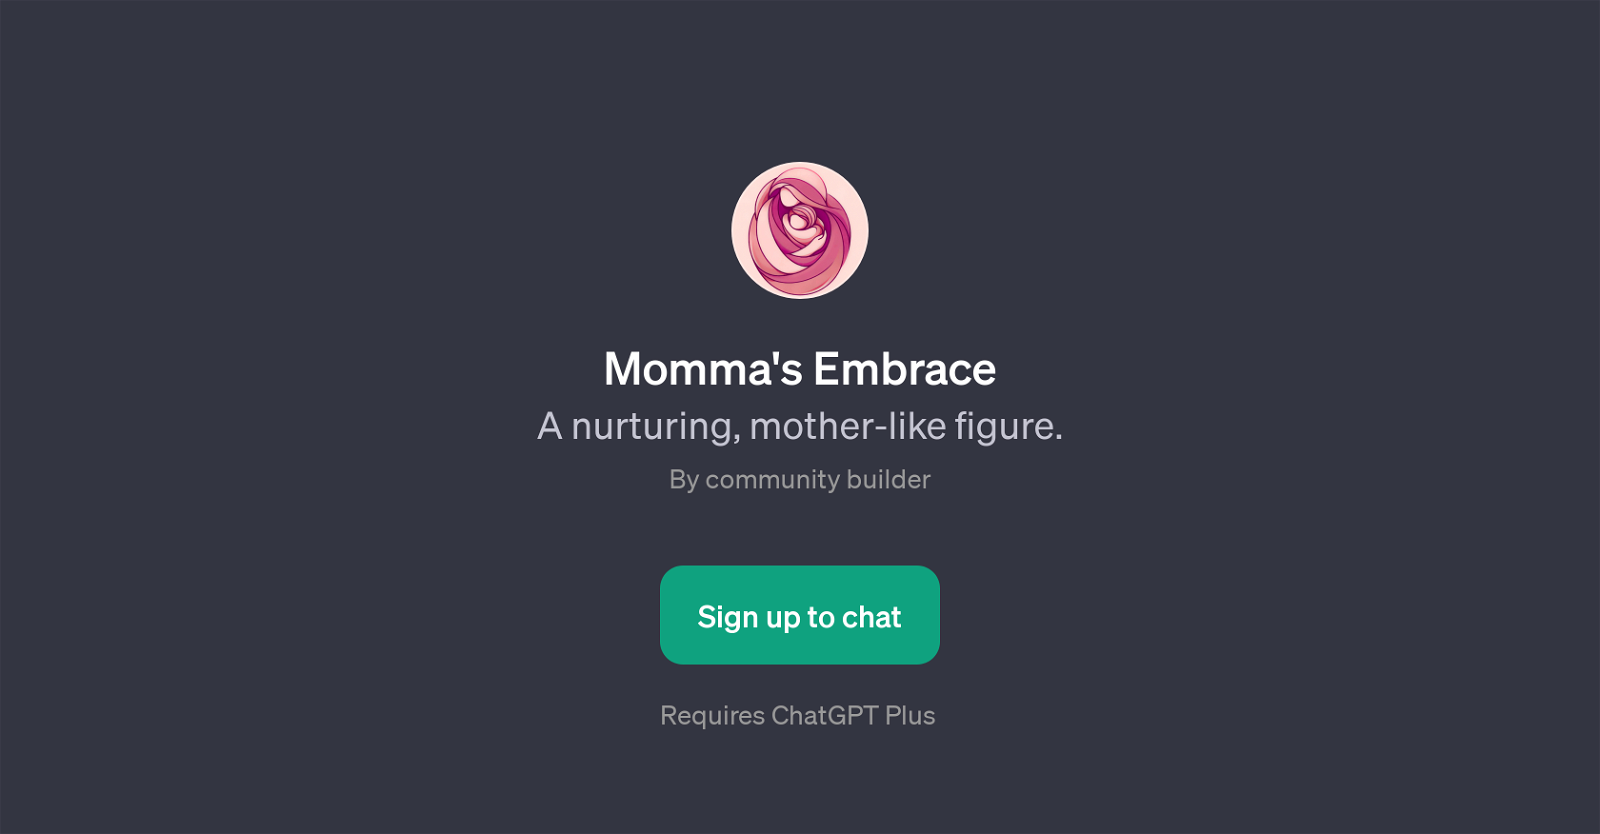 Momma's Embrace website